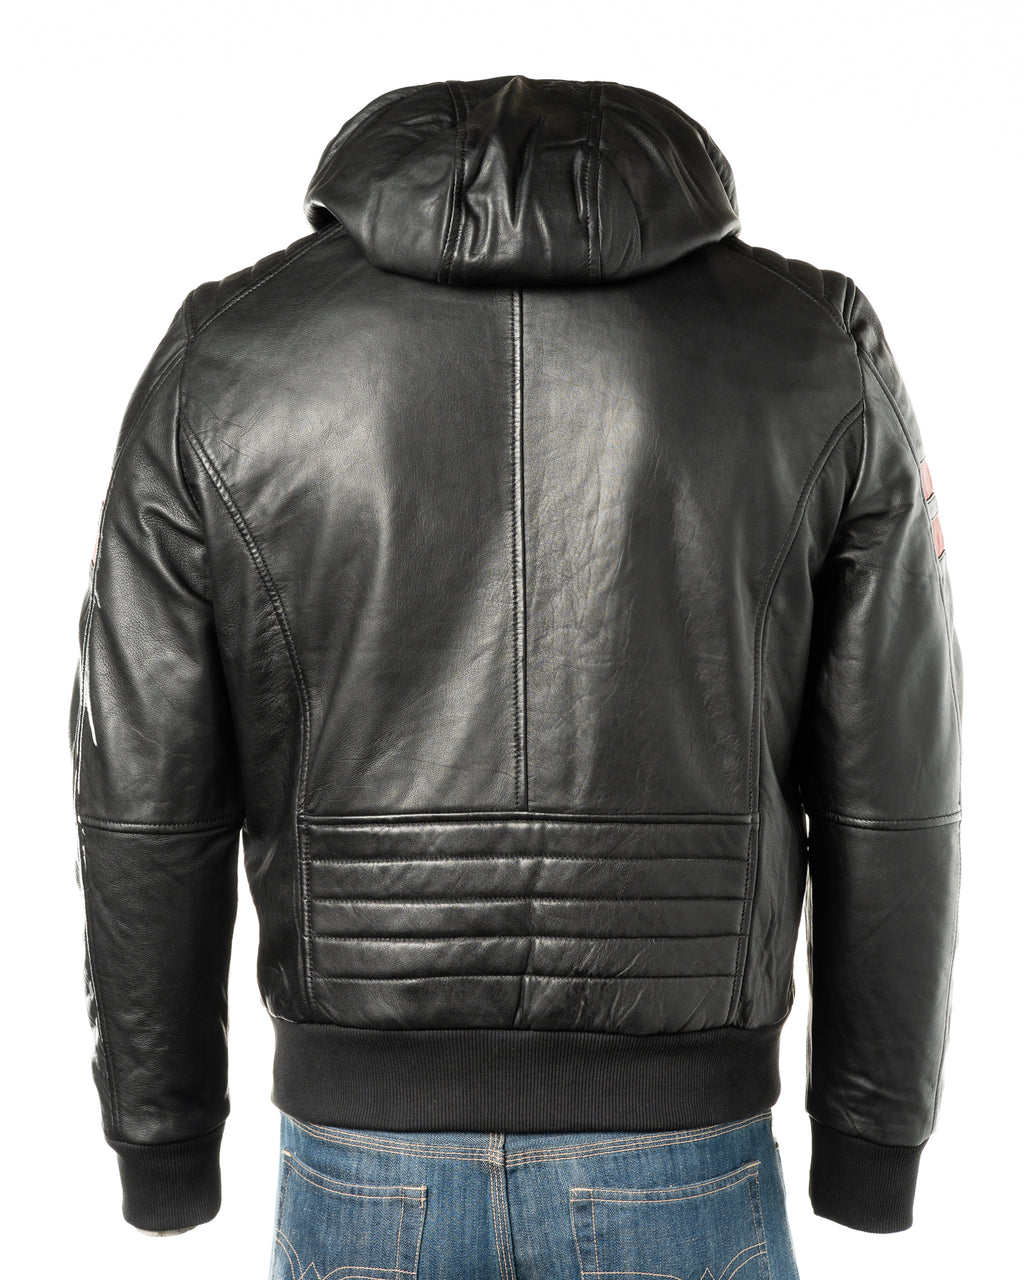 Men's Black Hooded Contrast Panelled Racer Style Leather Jacket: Rolando